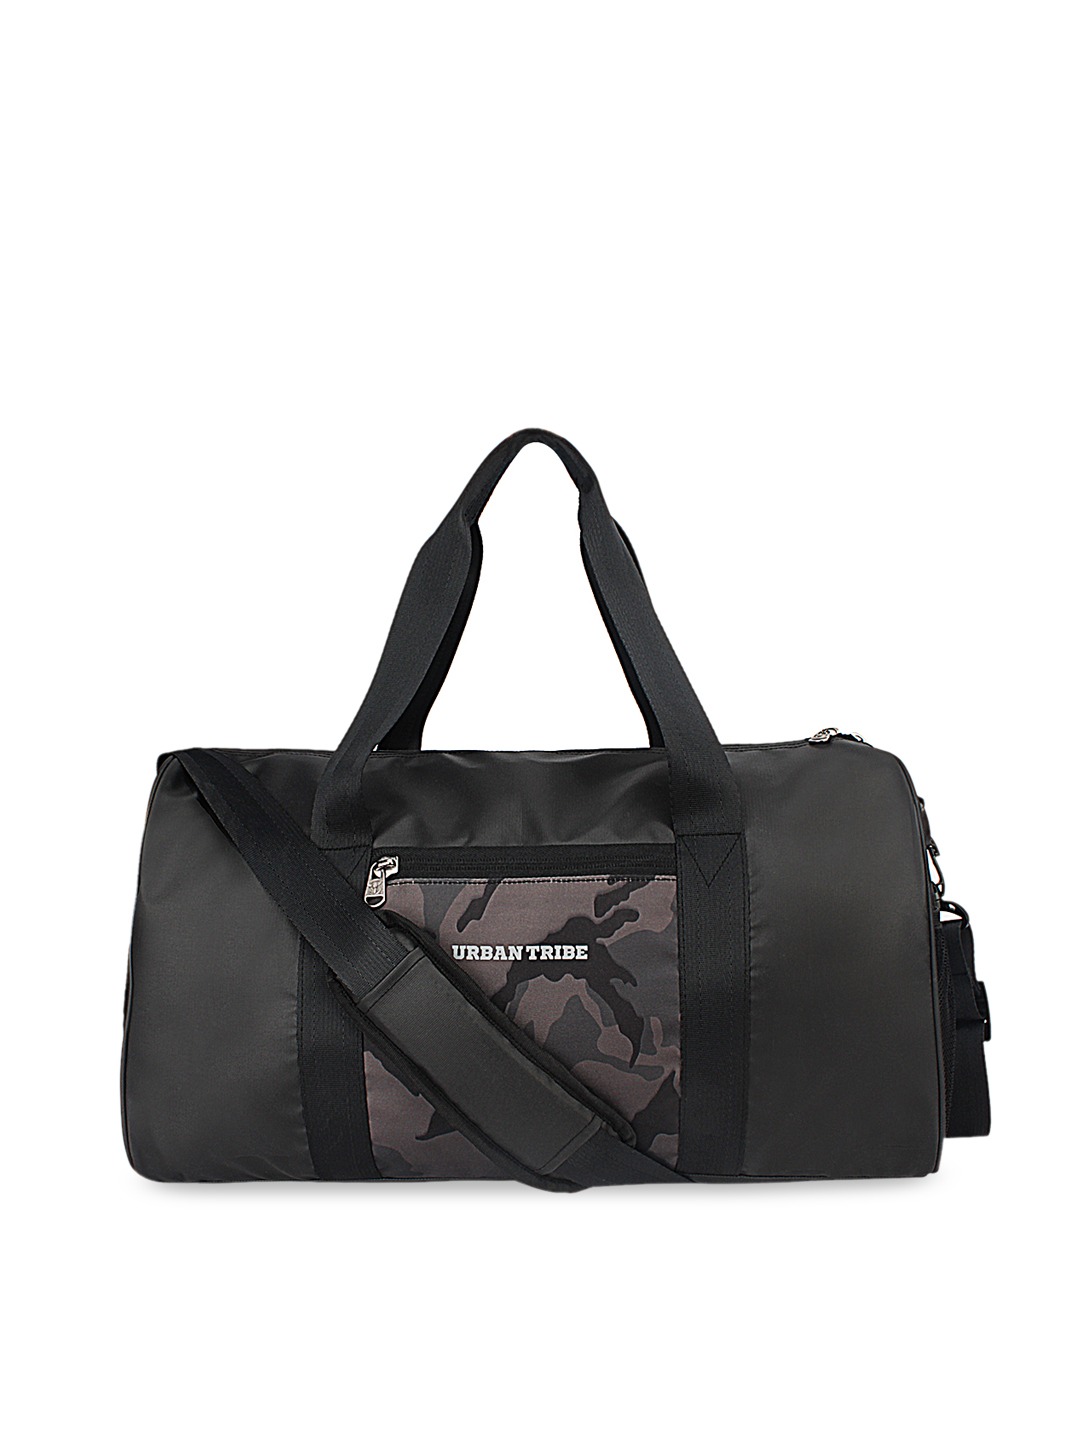 Accessories Duffel Bag | URBAN TRIBE Unisex Black Printed Duffel Bag - ZX74198